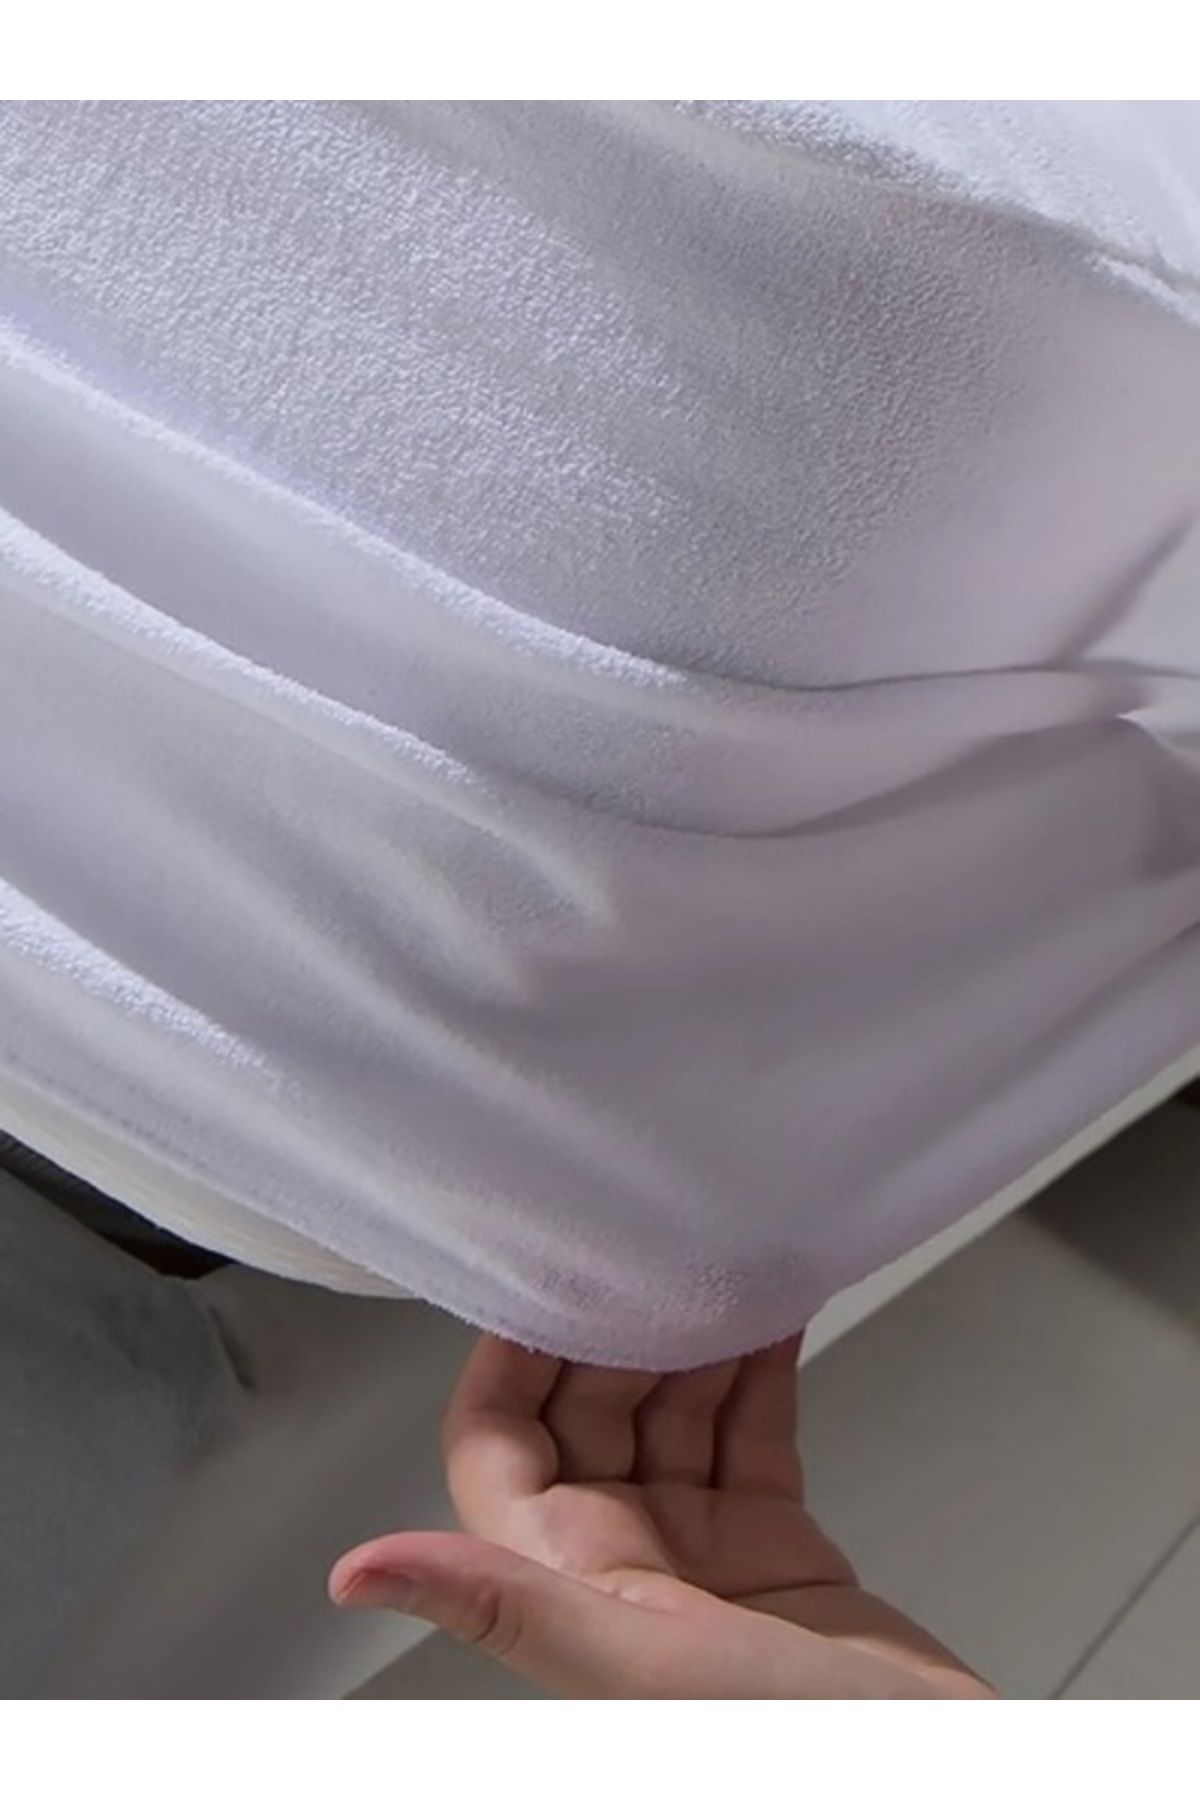 mer-tim ezberbozan ev tekstili Mer-tim Tek Kişilik Fitted Lastikli Sıvı Geçirmez Alez 90x190